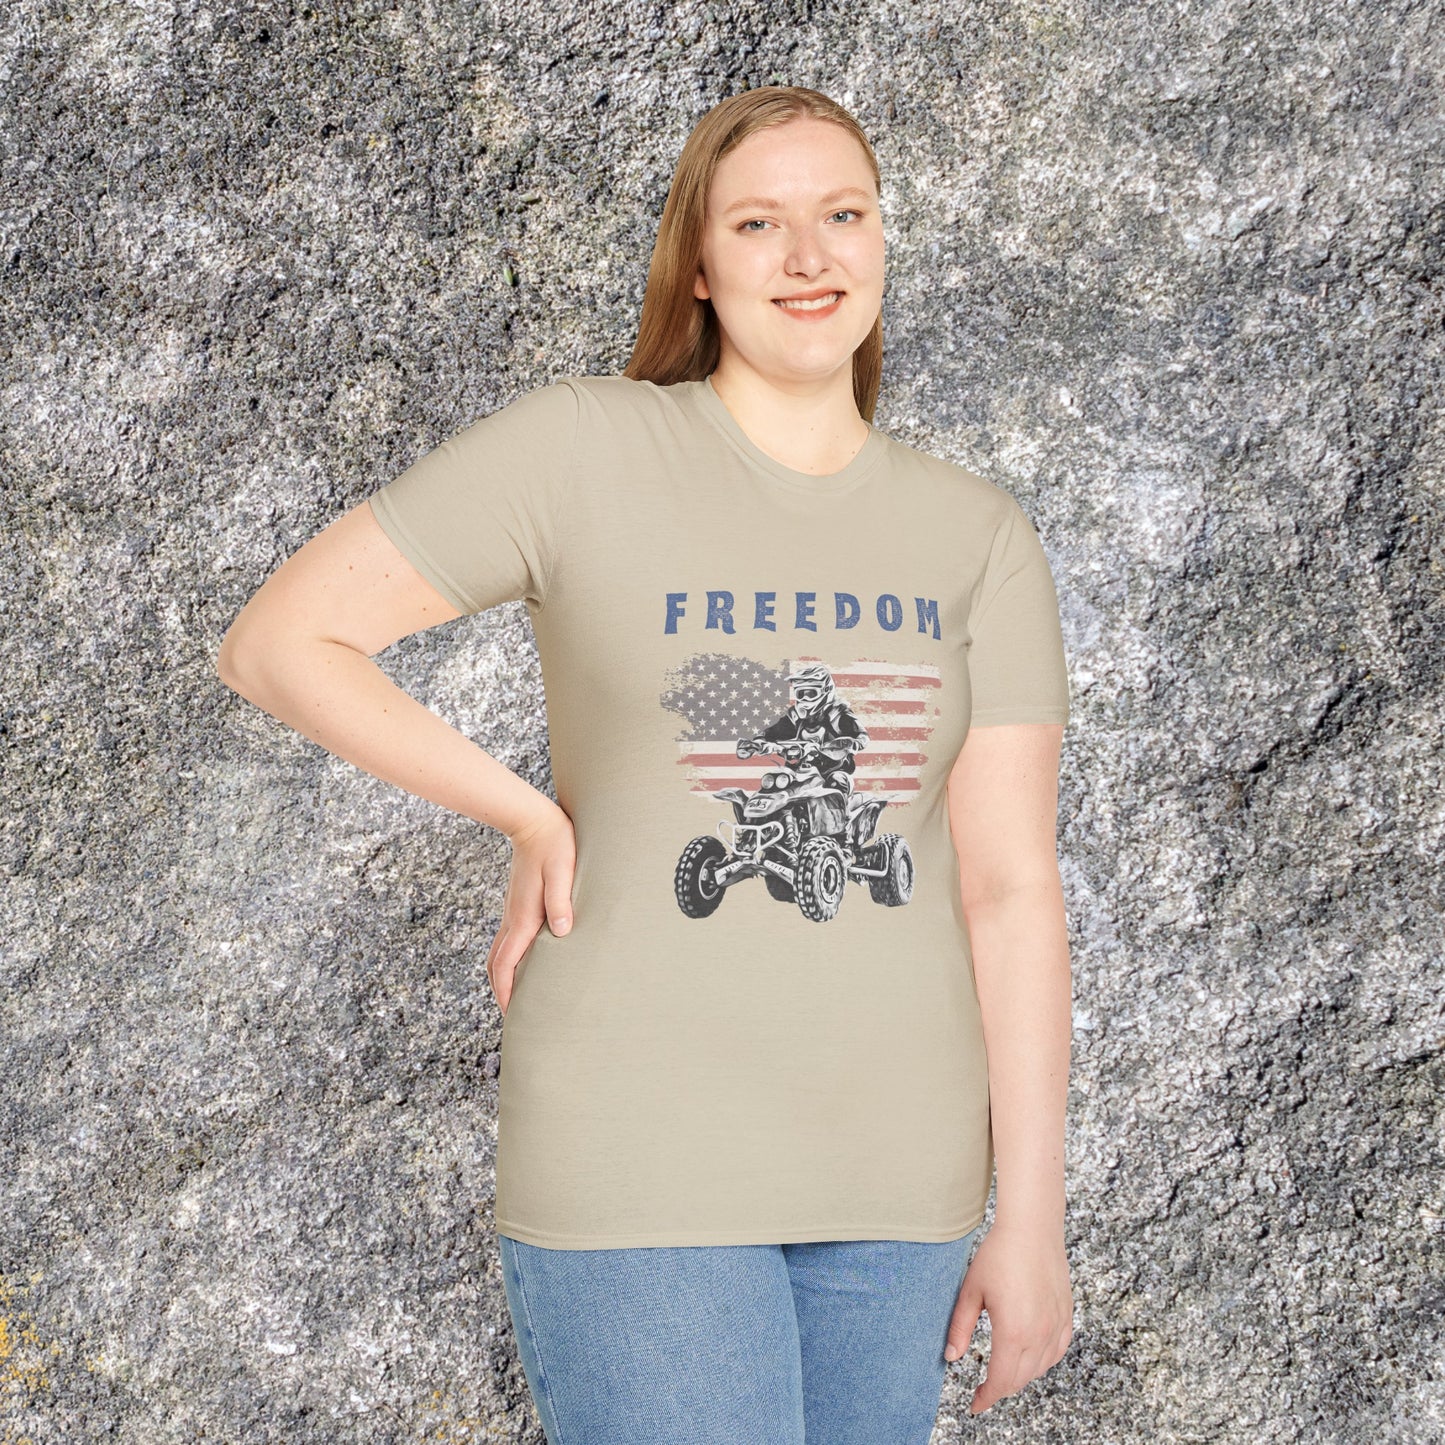 Mens ATV Shirt | Freedom Rider | American flag with man on Honda 400 EX ATV | Patriotic four wheeler riding shirt | SOFT Cotton Adult Unisex tee shirt | Four wheeler shirt for Boys